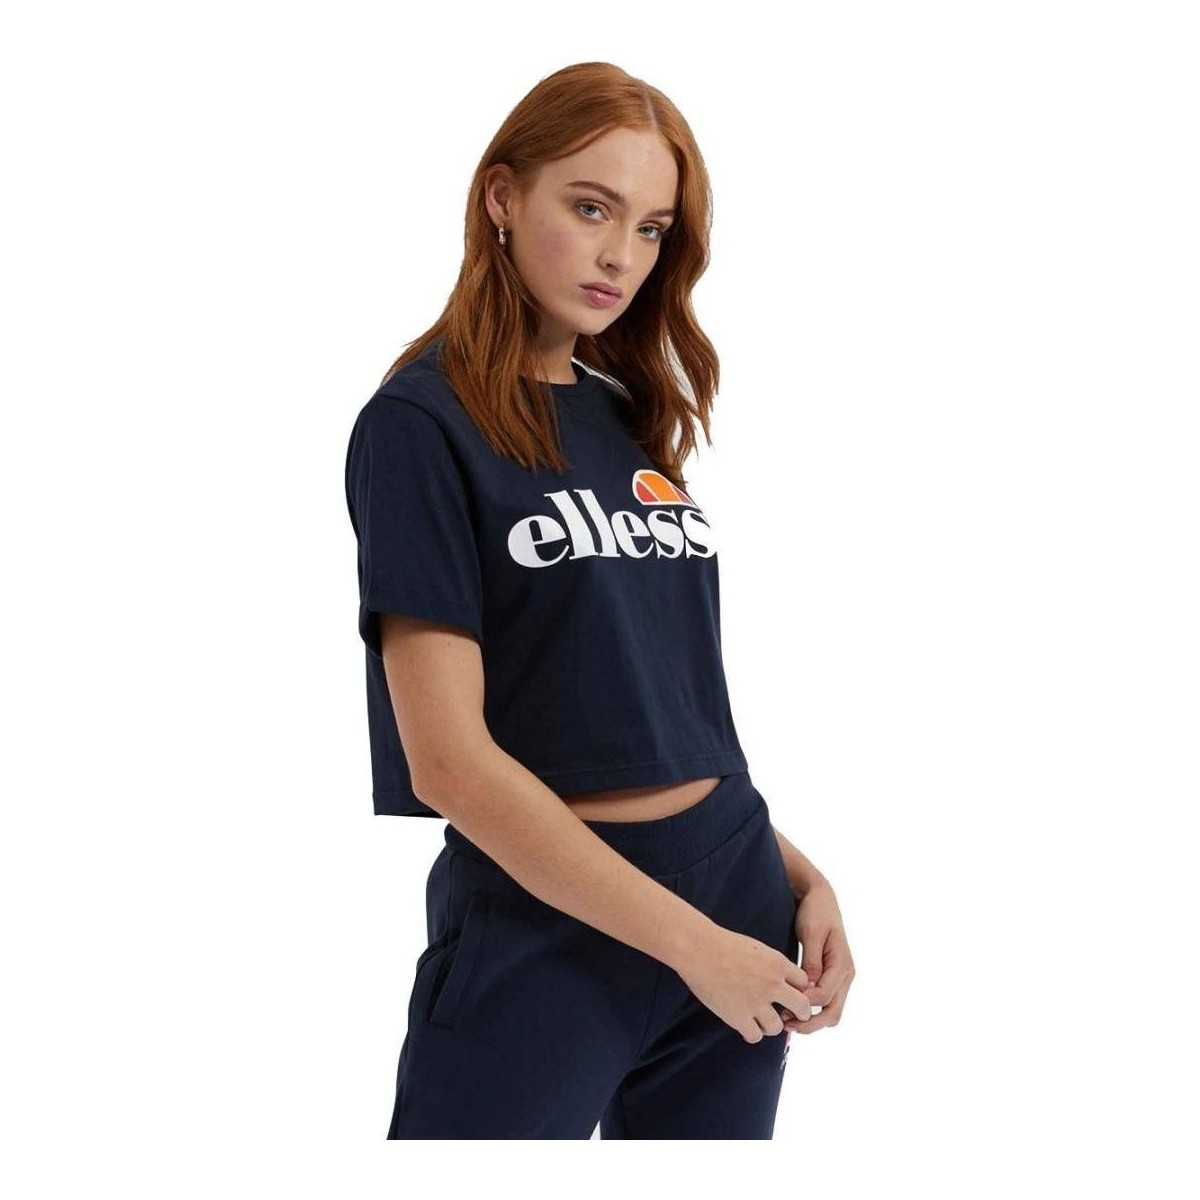 textil Mujer Camisetas manga corta Ellesse SGS04484NAVY Azul